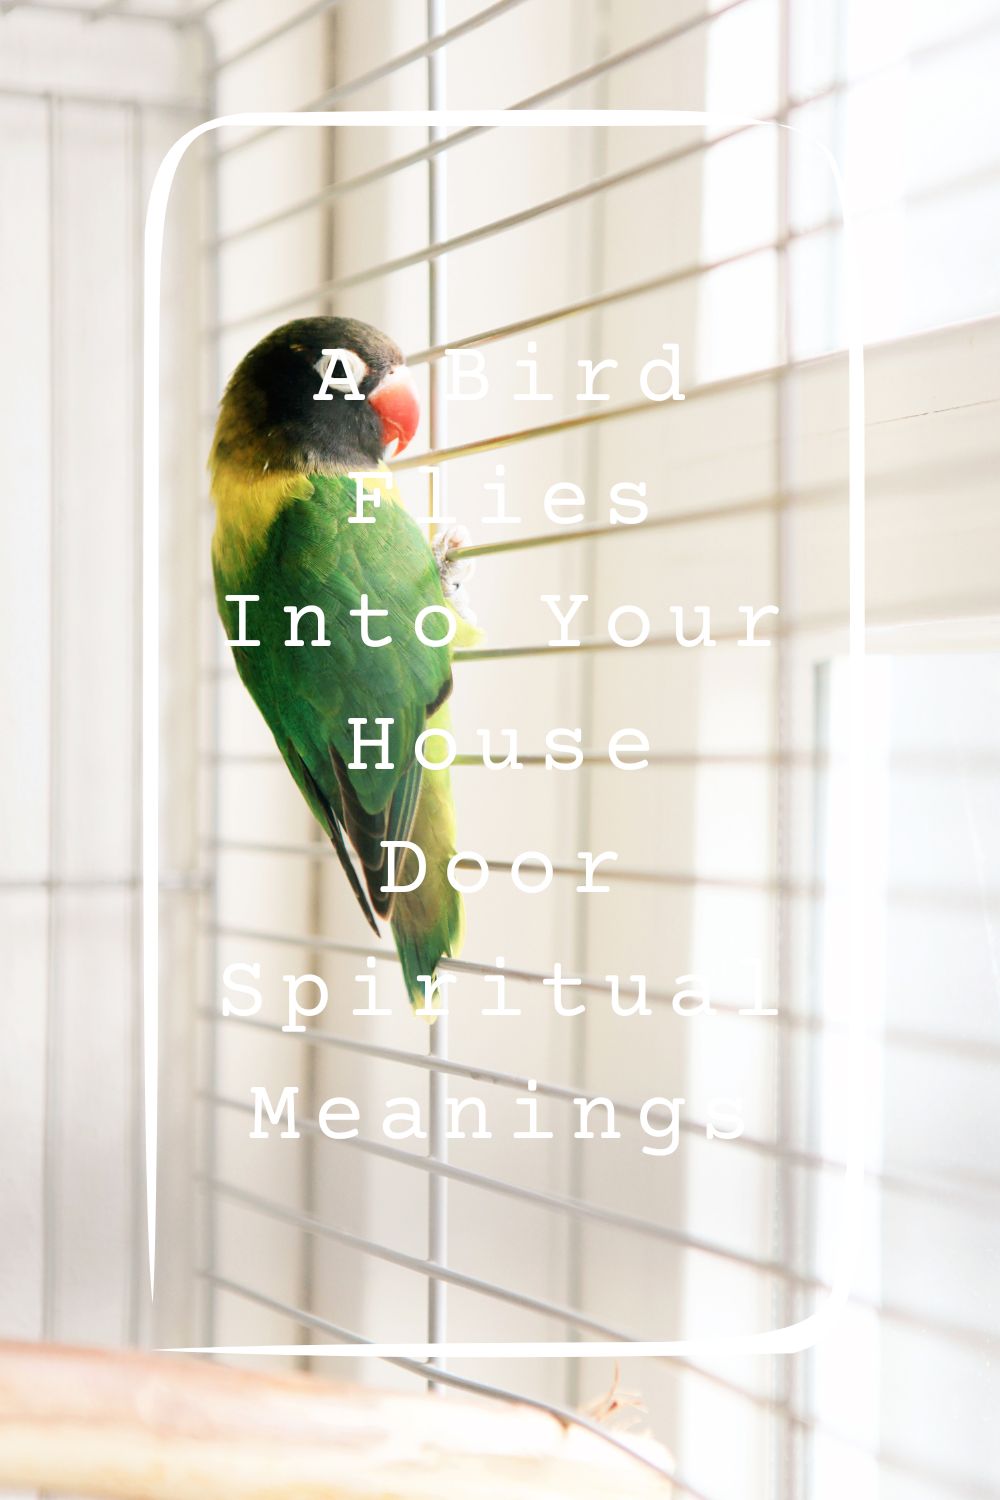 9 A Bird Flies Into Your House Door Spiritual Meanings4